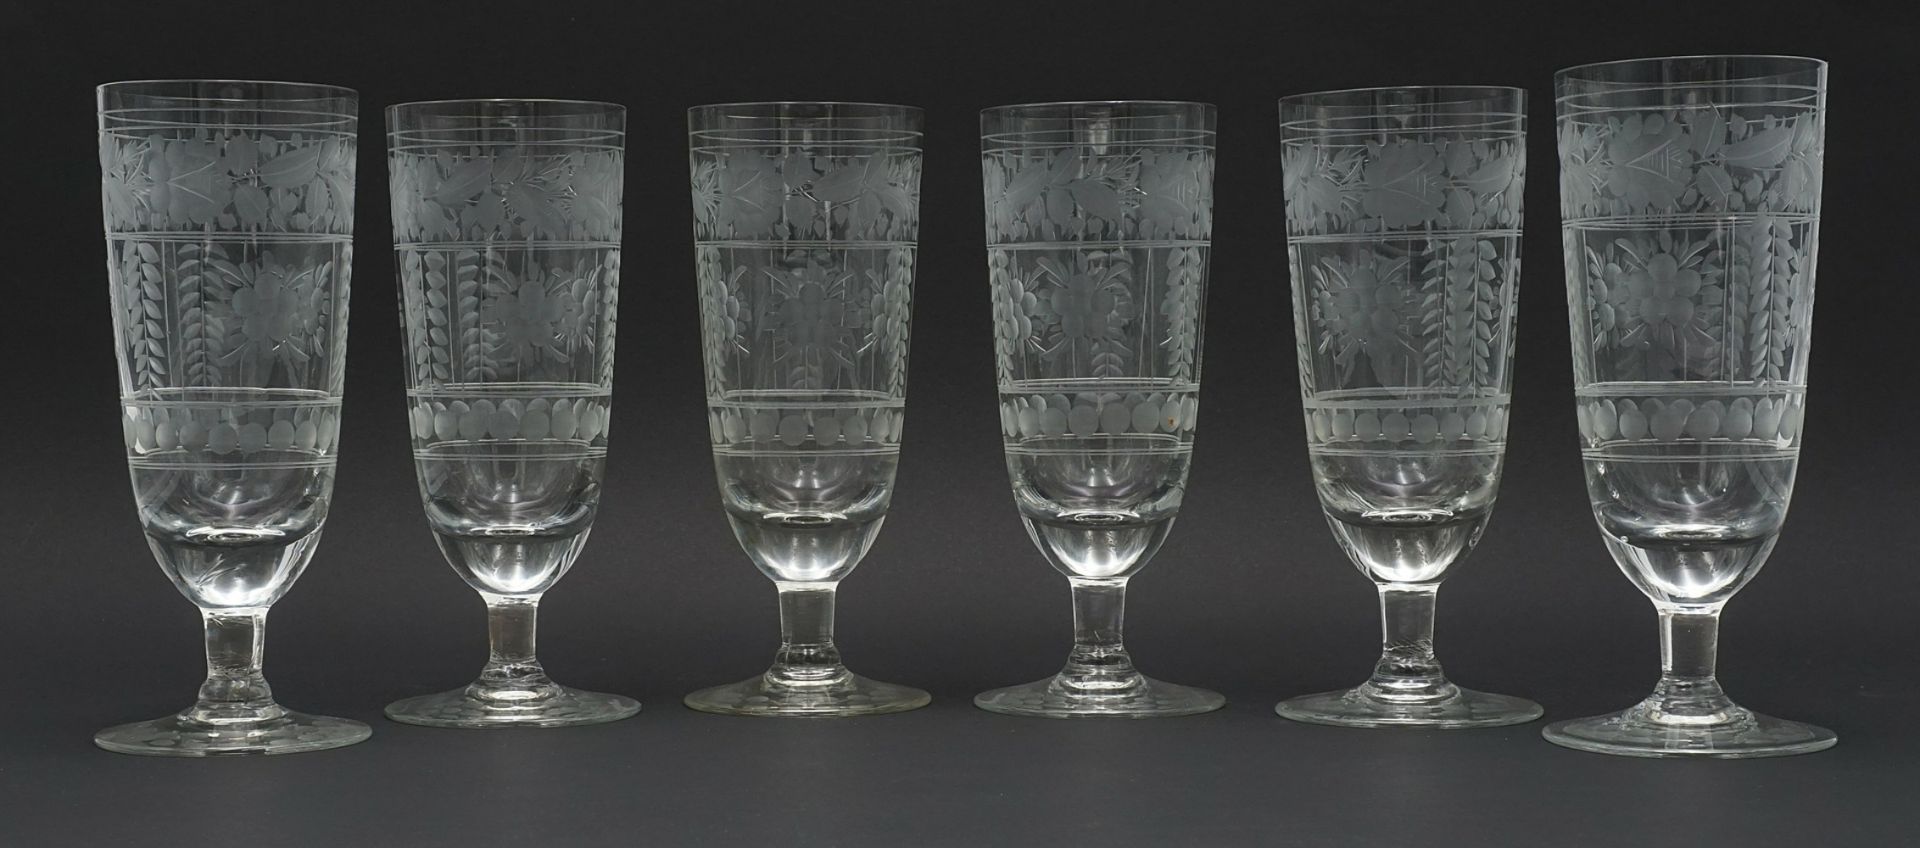 Six beer glasses, around 1900 - Image 2 of 2